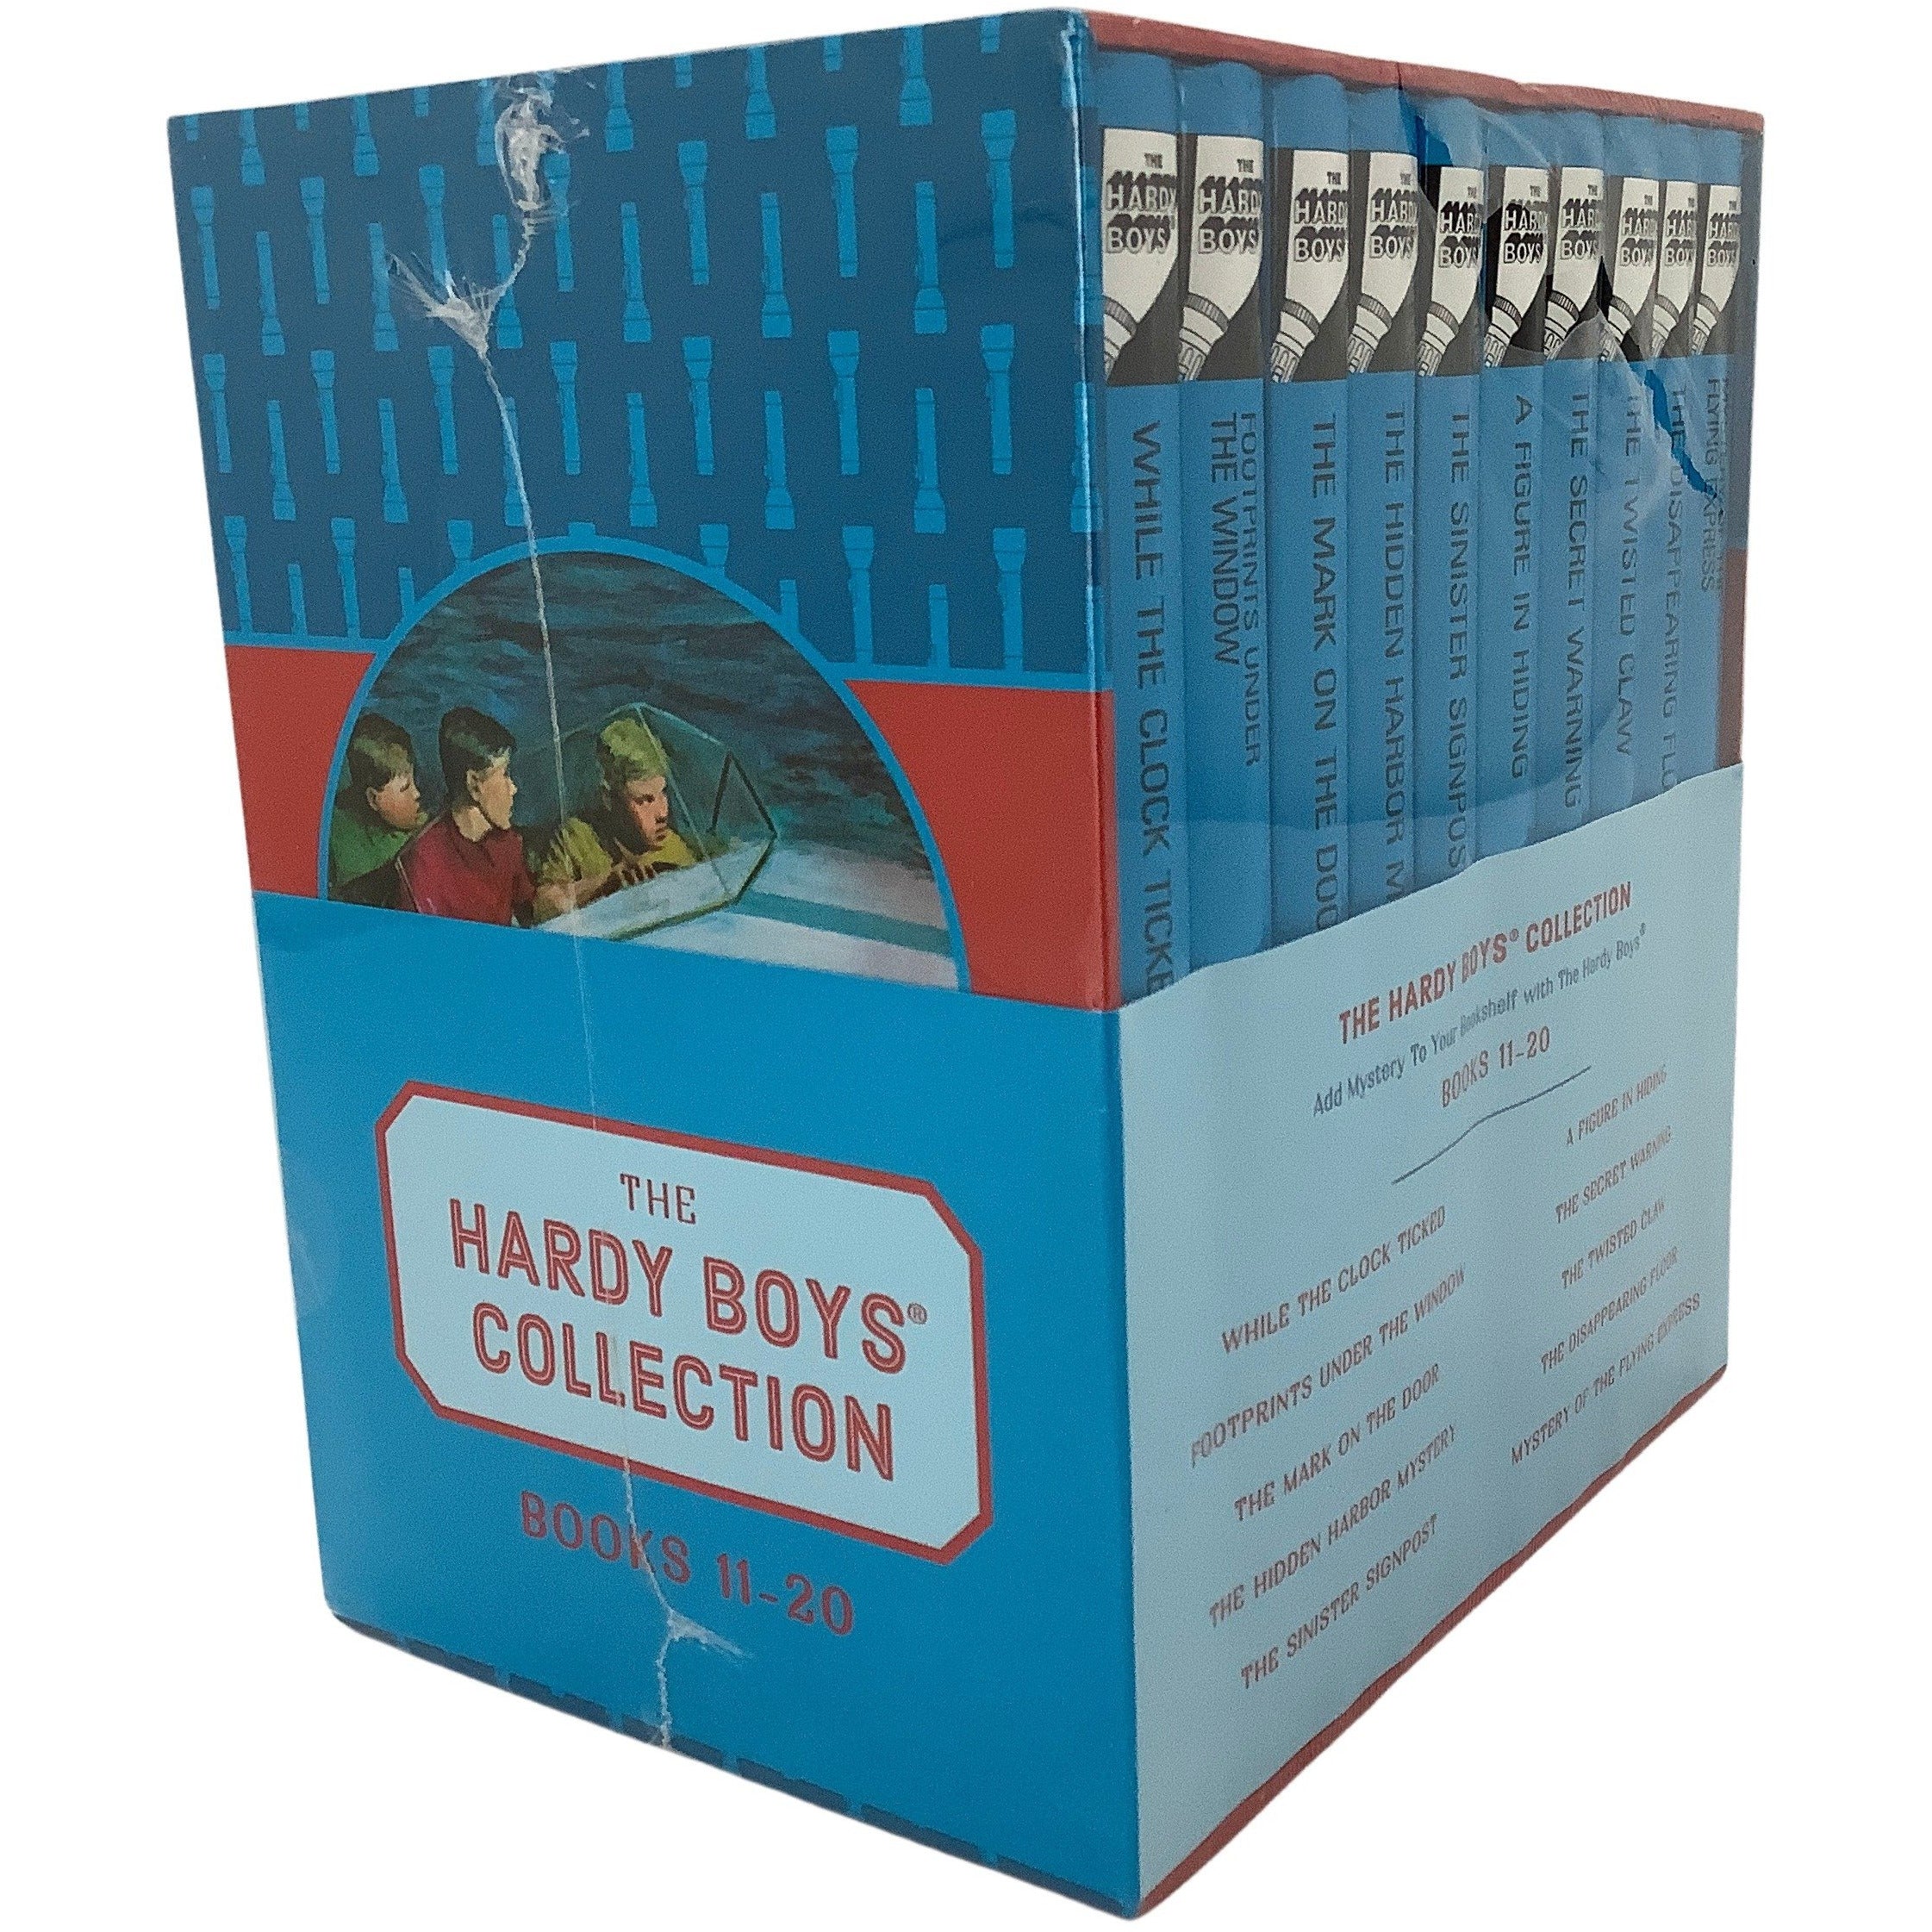 The Hardy Boys Books: Books 11-20 **DEALS**